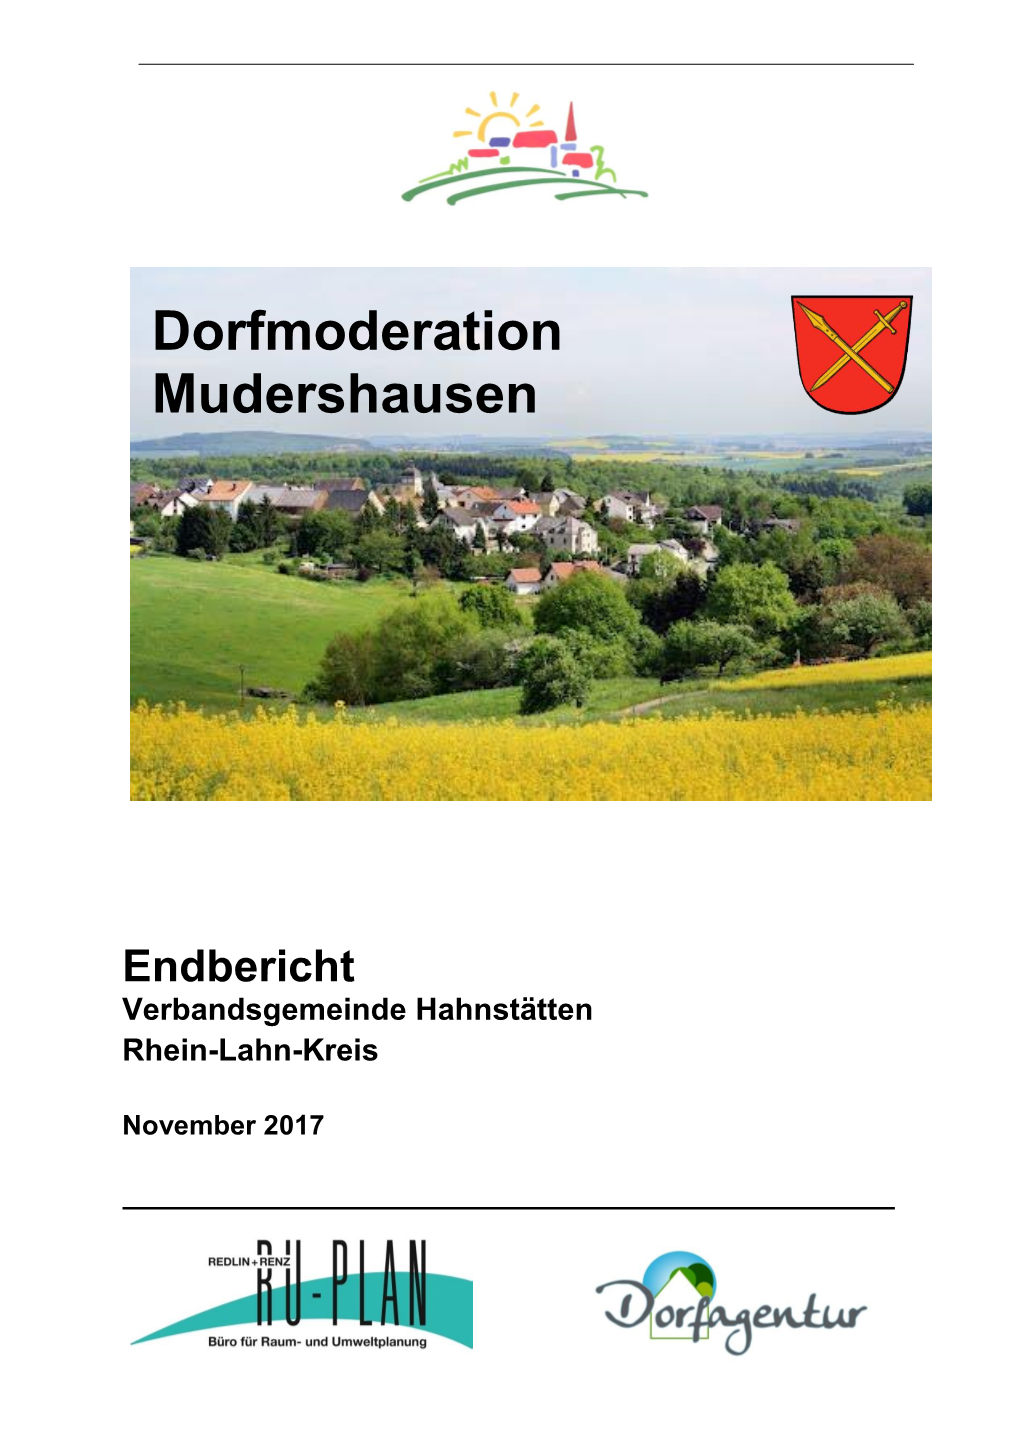 Dorfmoderation Mudershausen